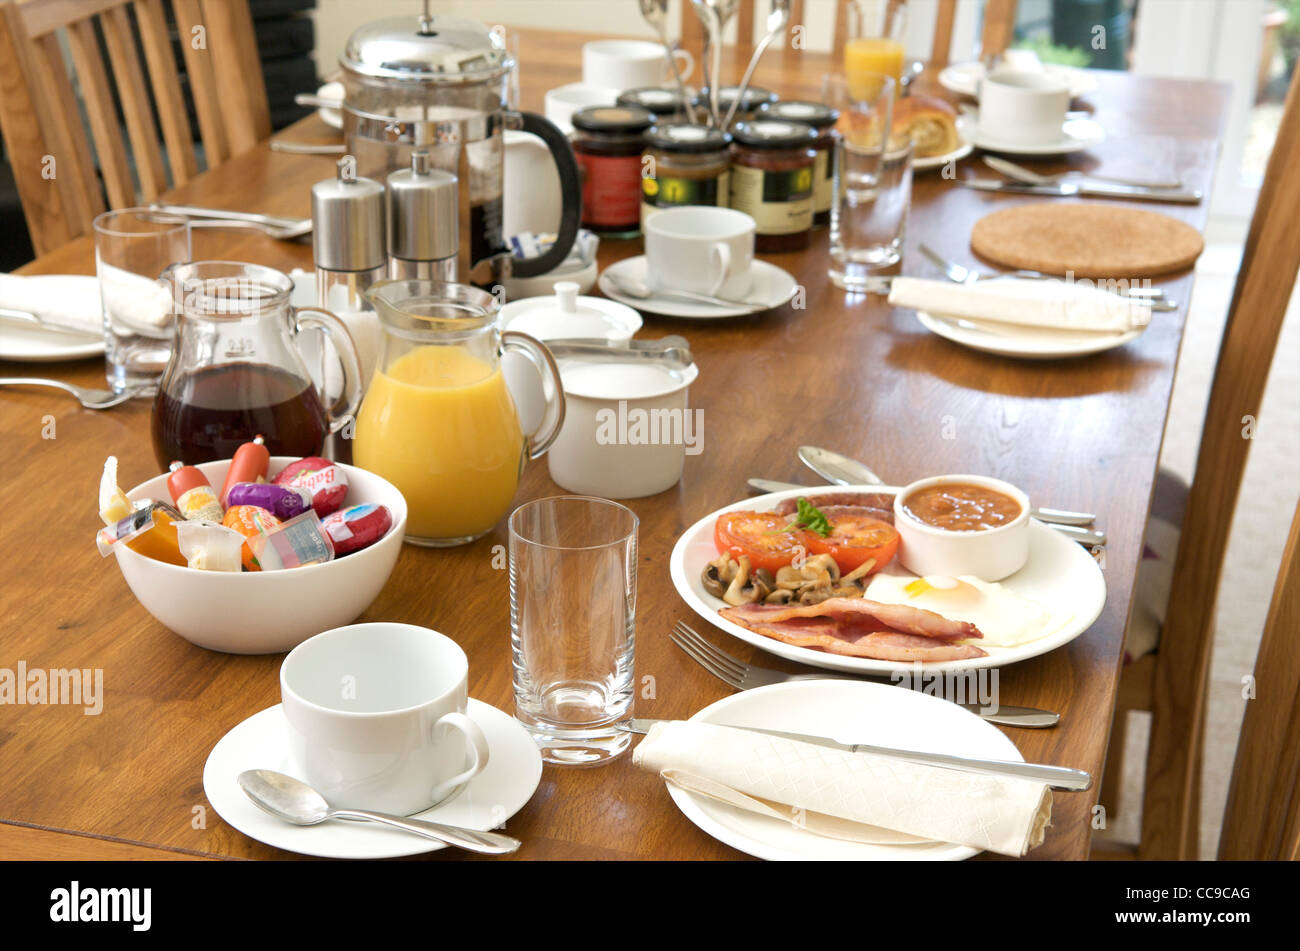 american breakfast table setting